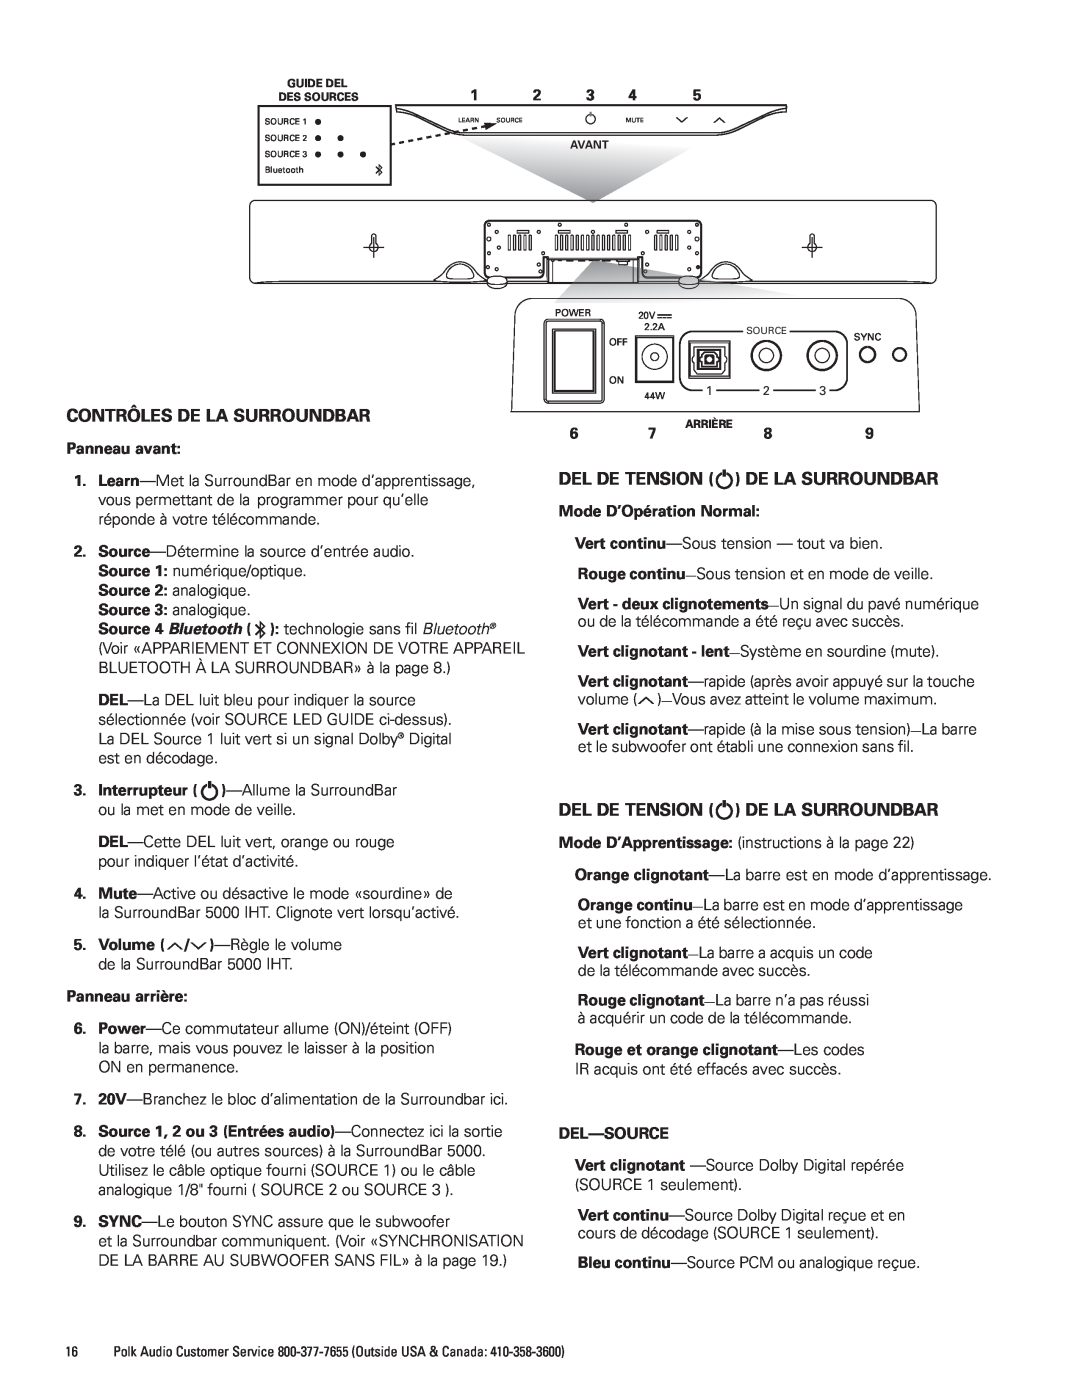 Polk Audio 5000 manual Contrôles De La Surroundbar, Del De Tension De La Surroundbar 